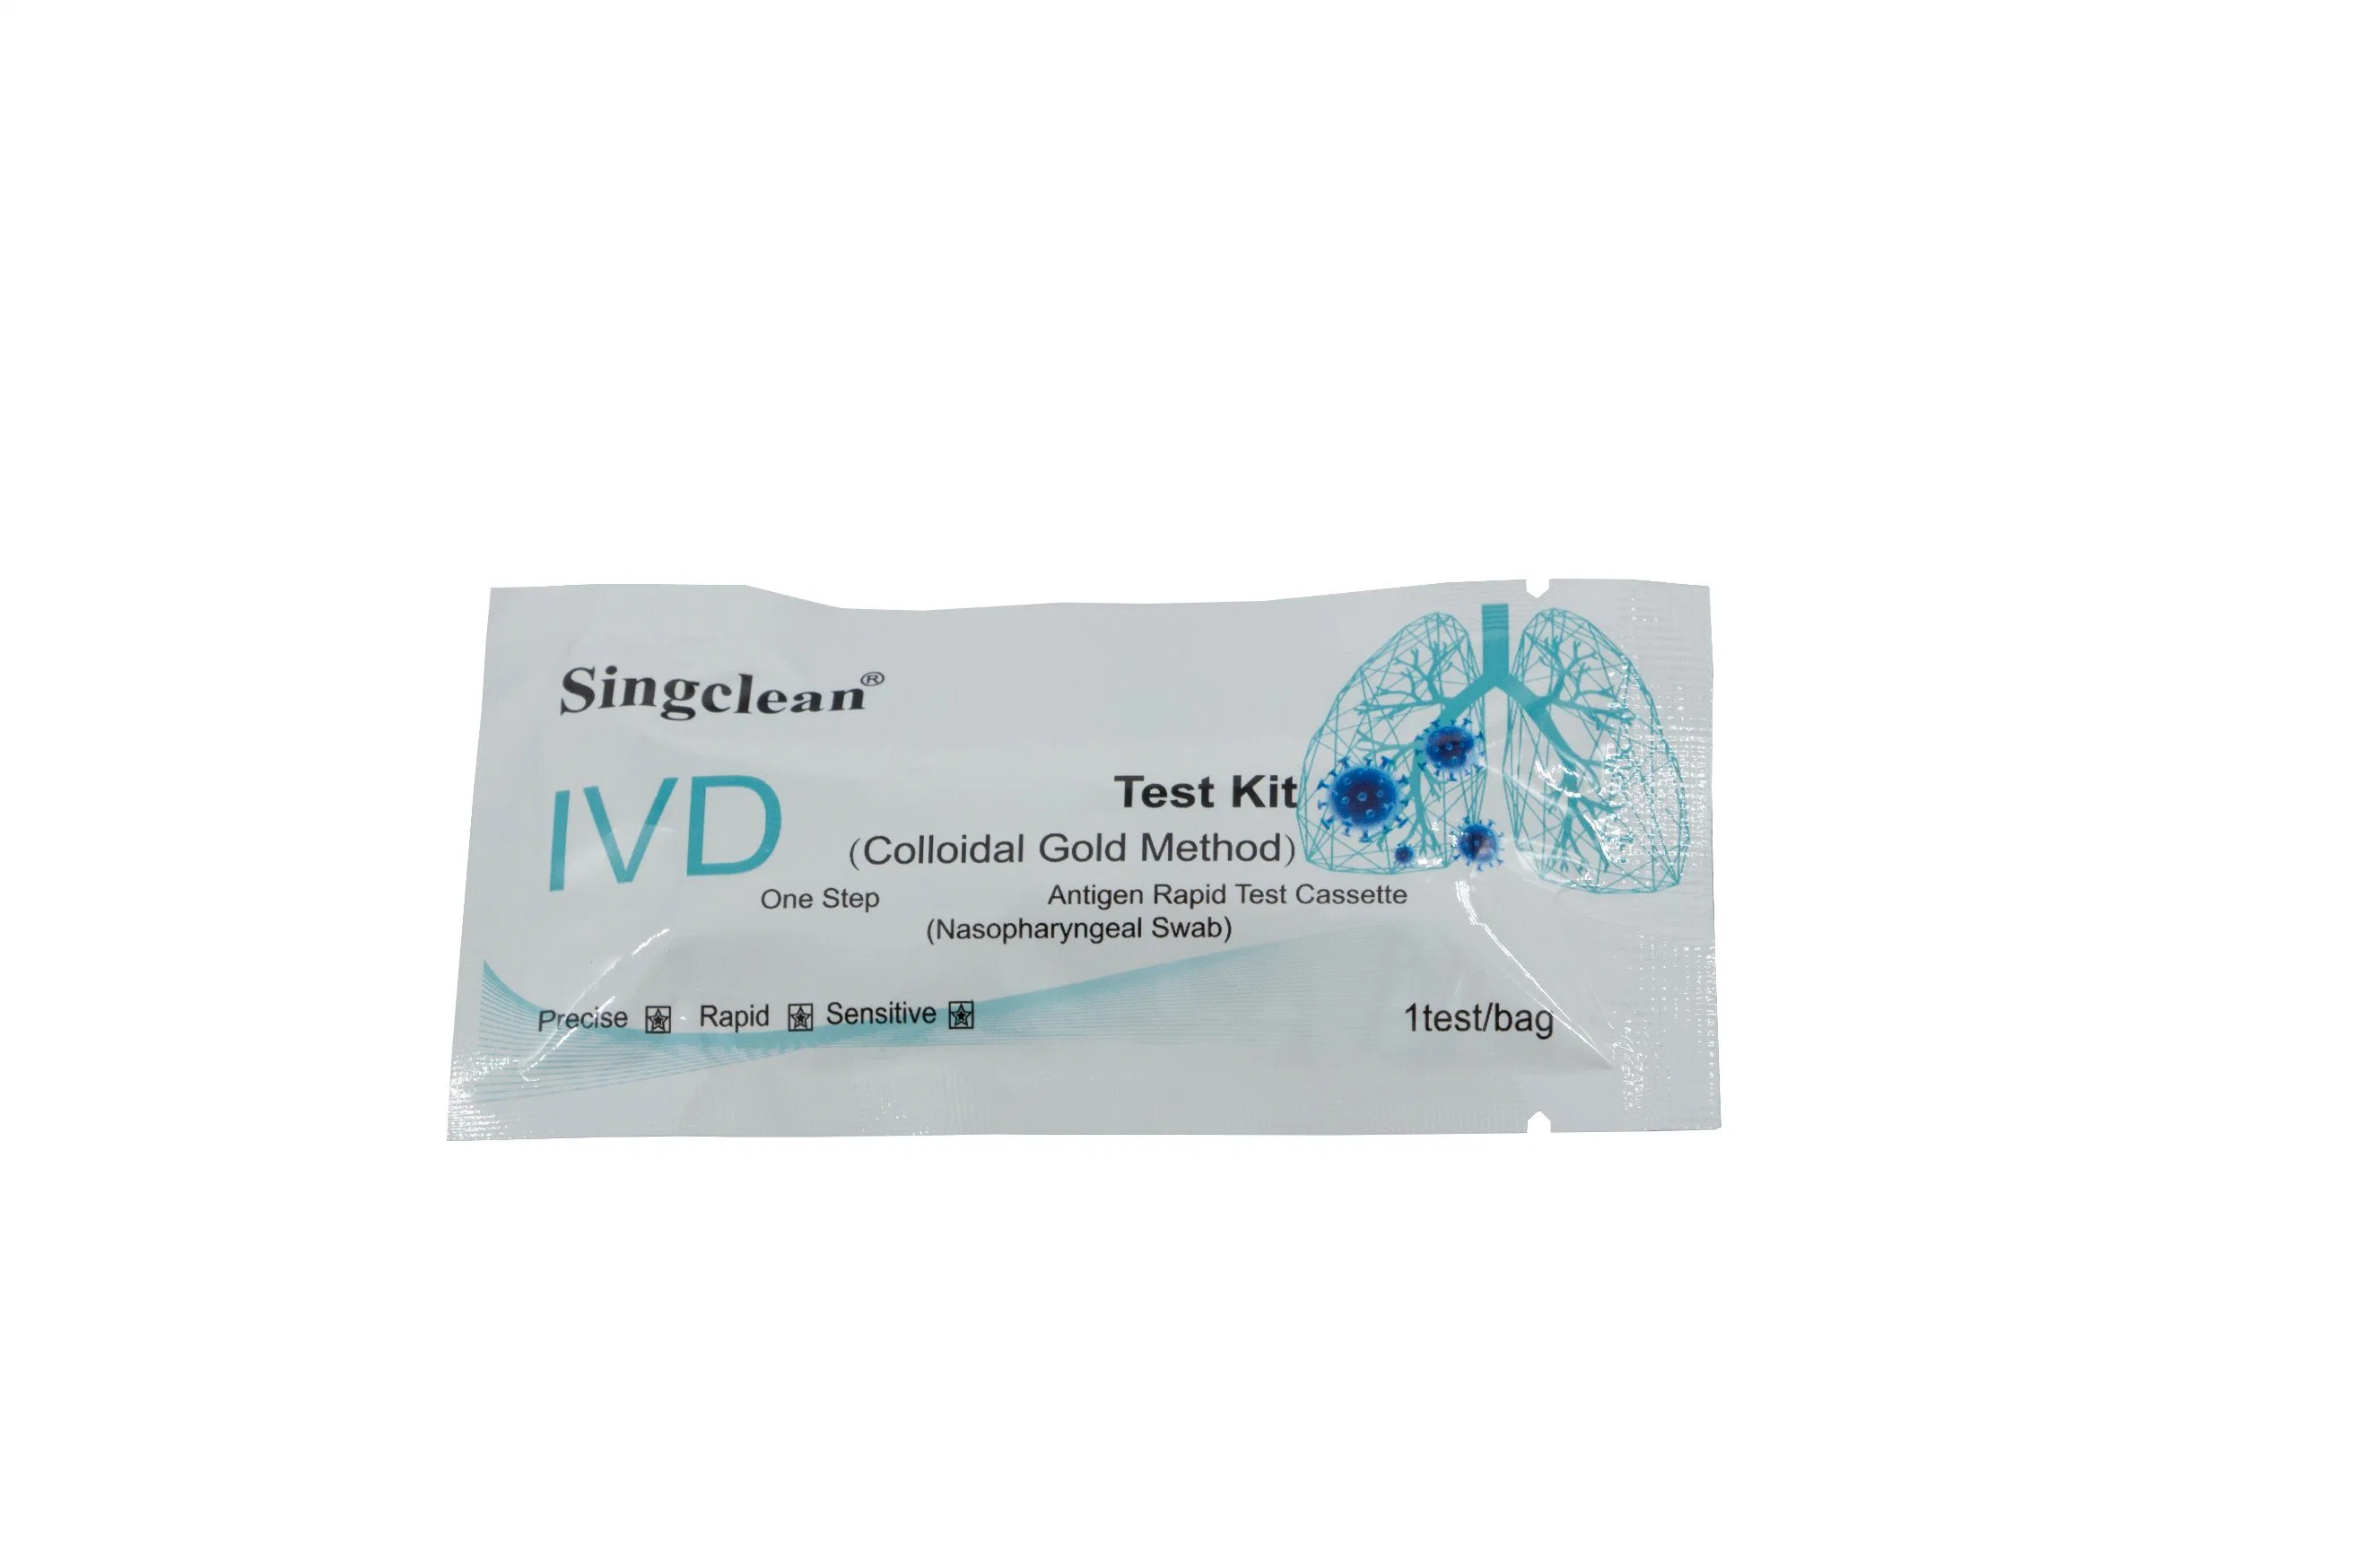 New Igg/Igm Rapid Test Kit Antibody Test & Test Kit